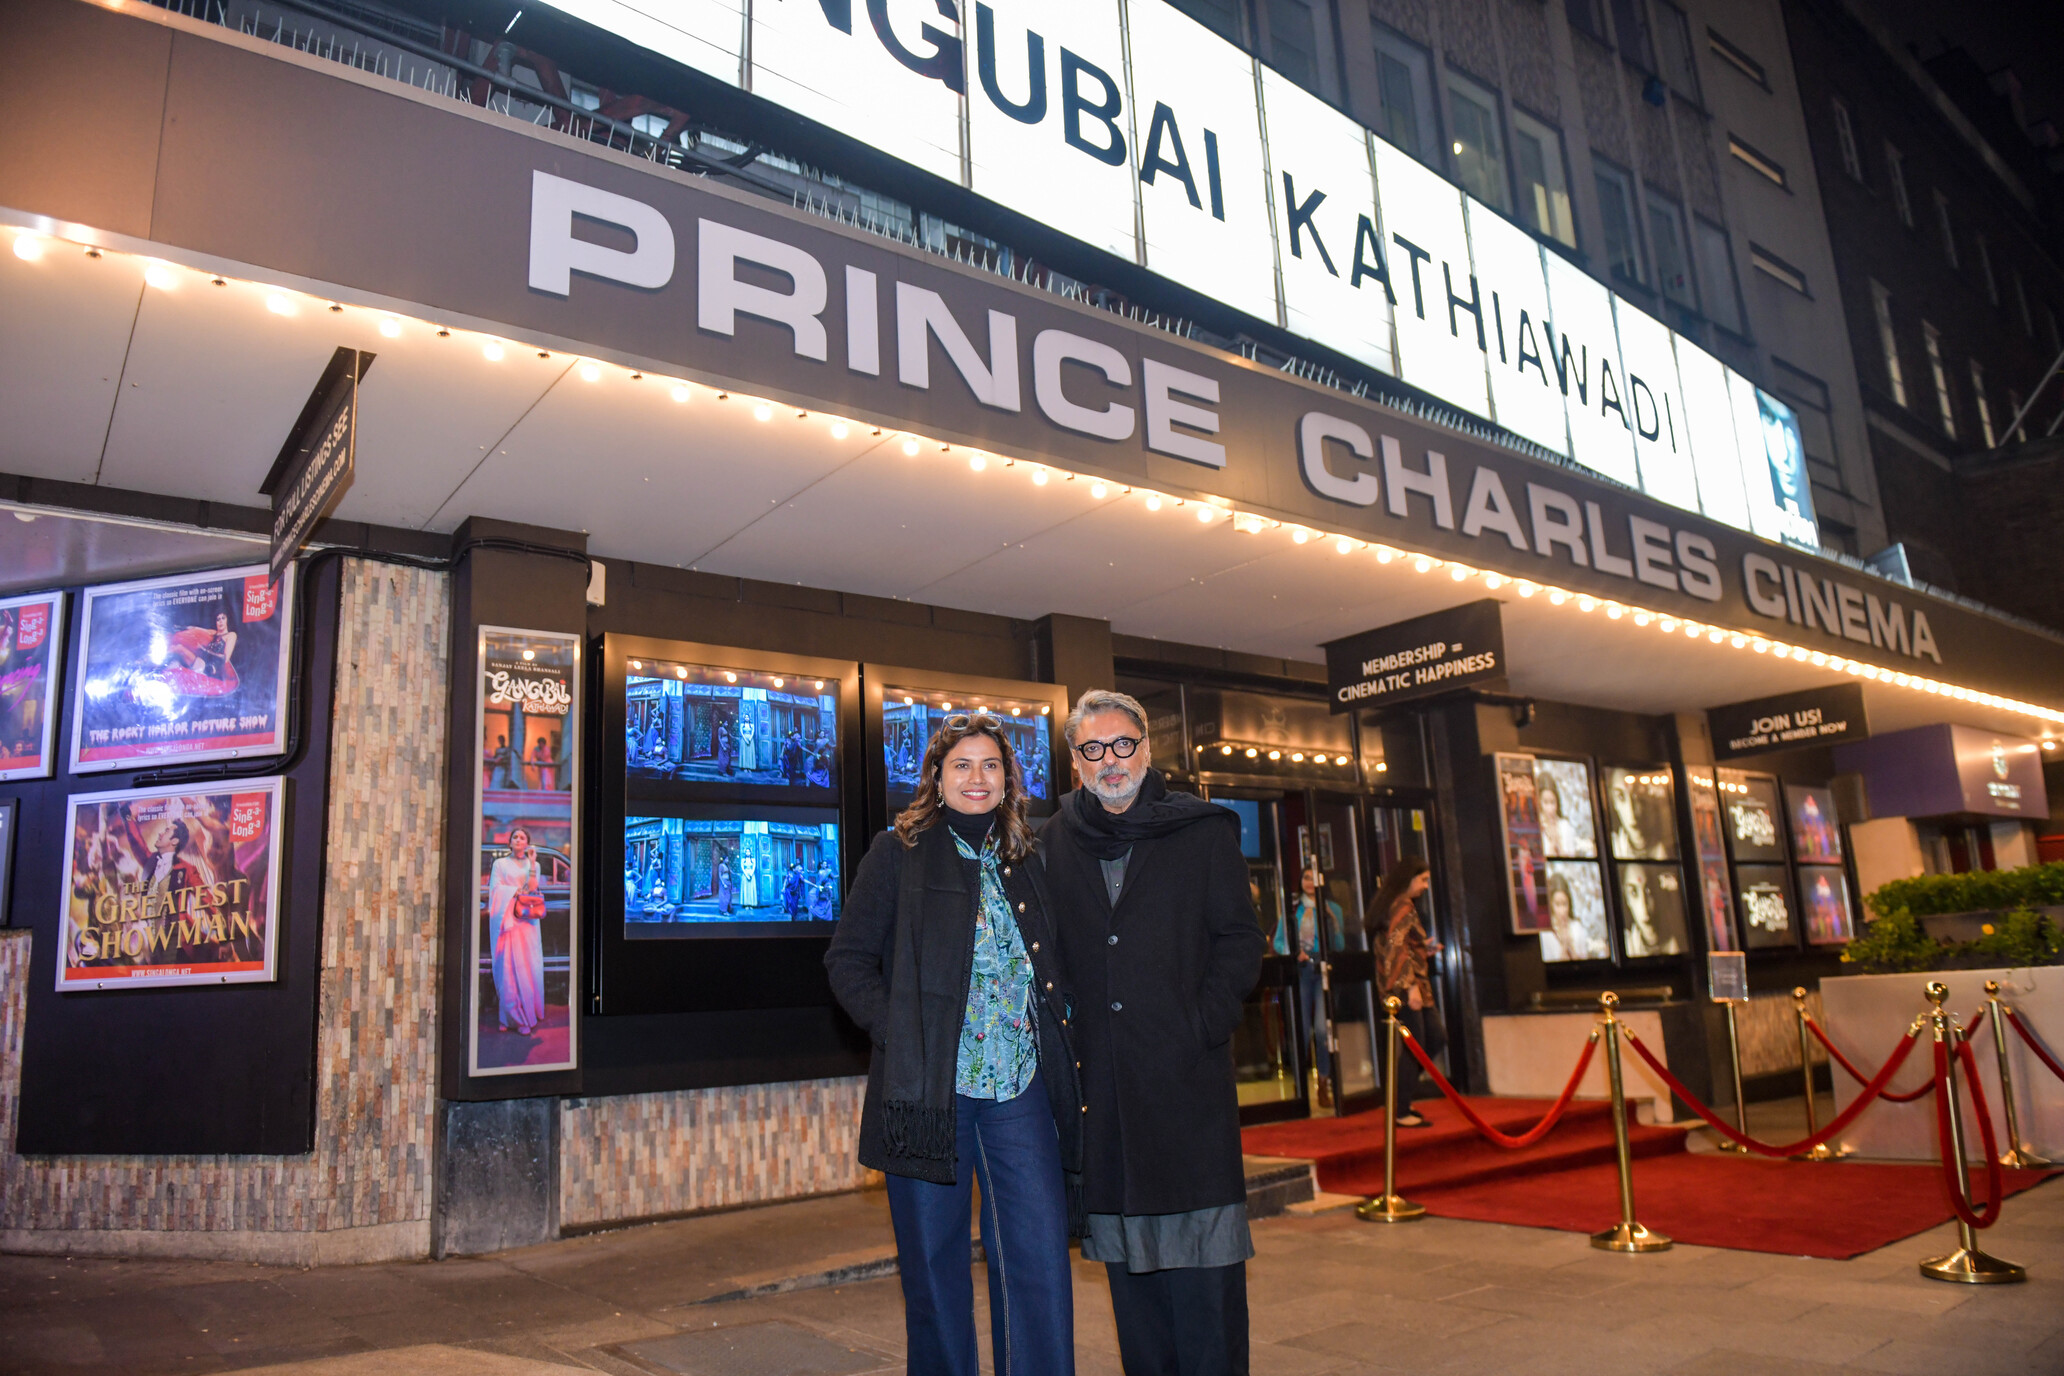 Prince Charles Cinema (7)